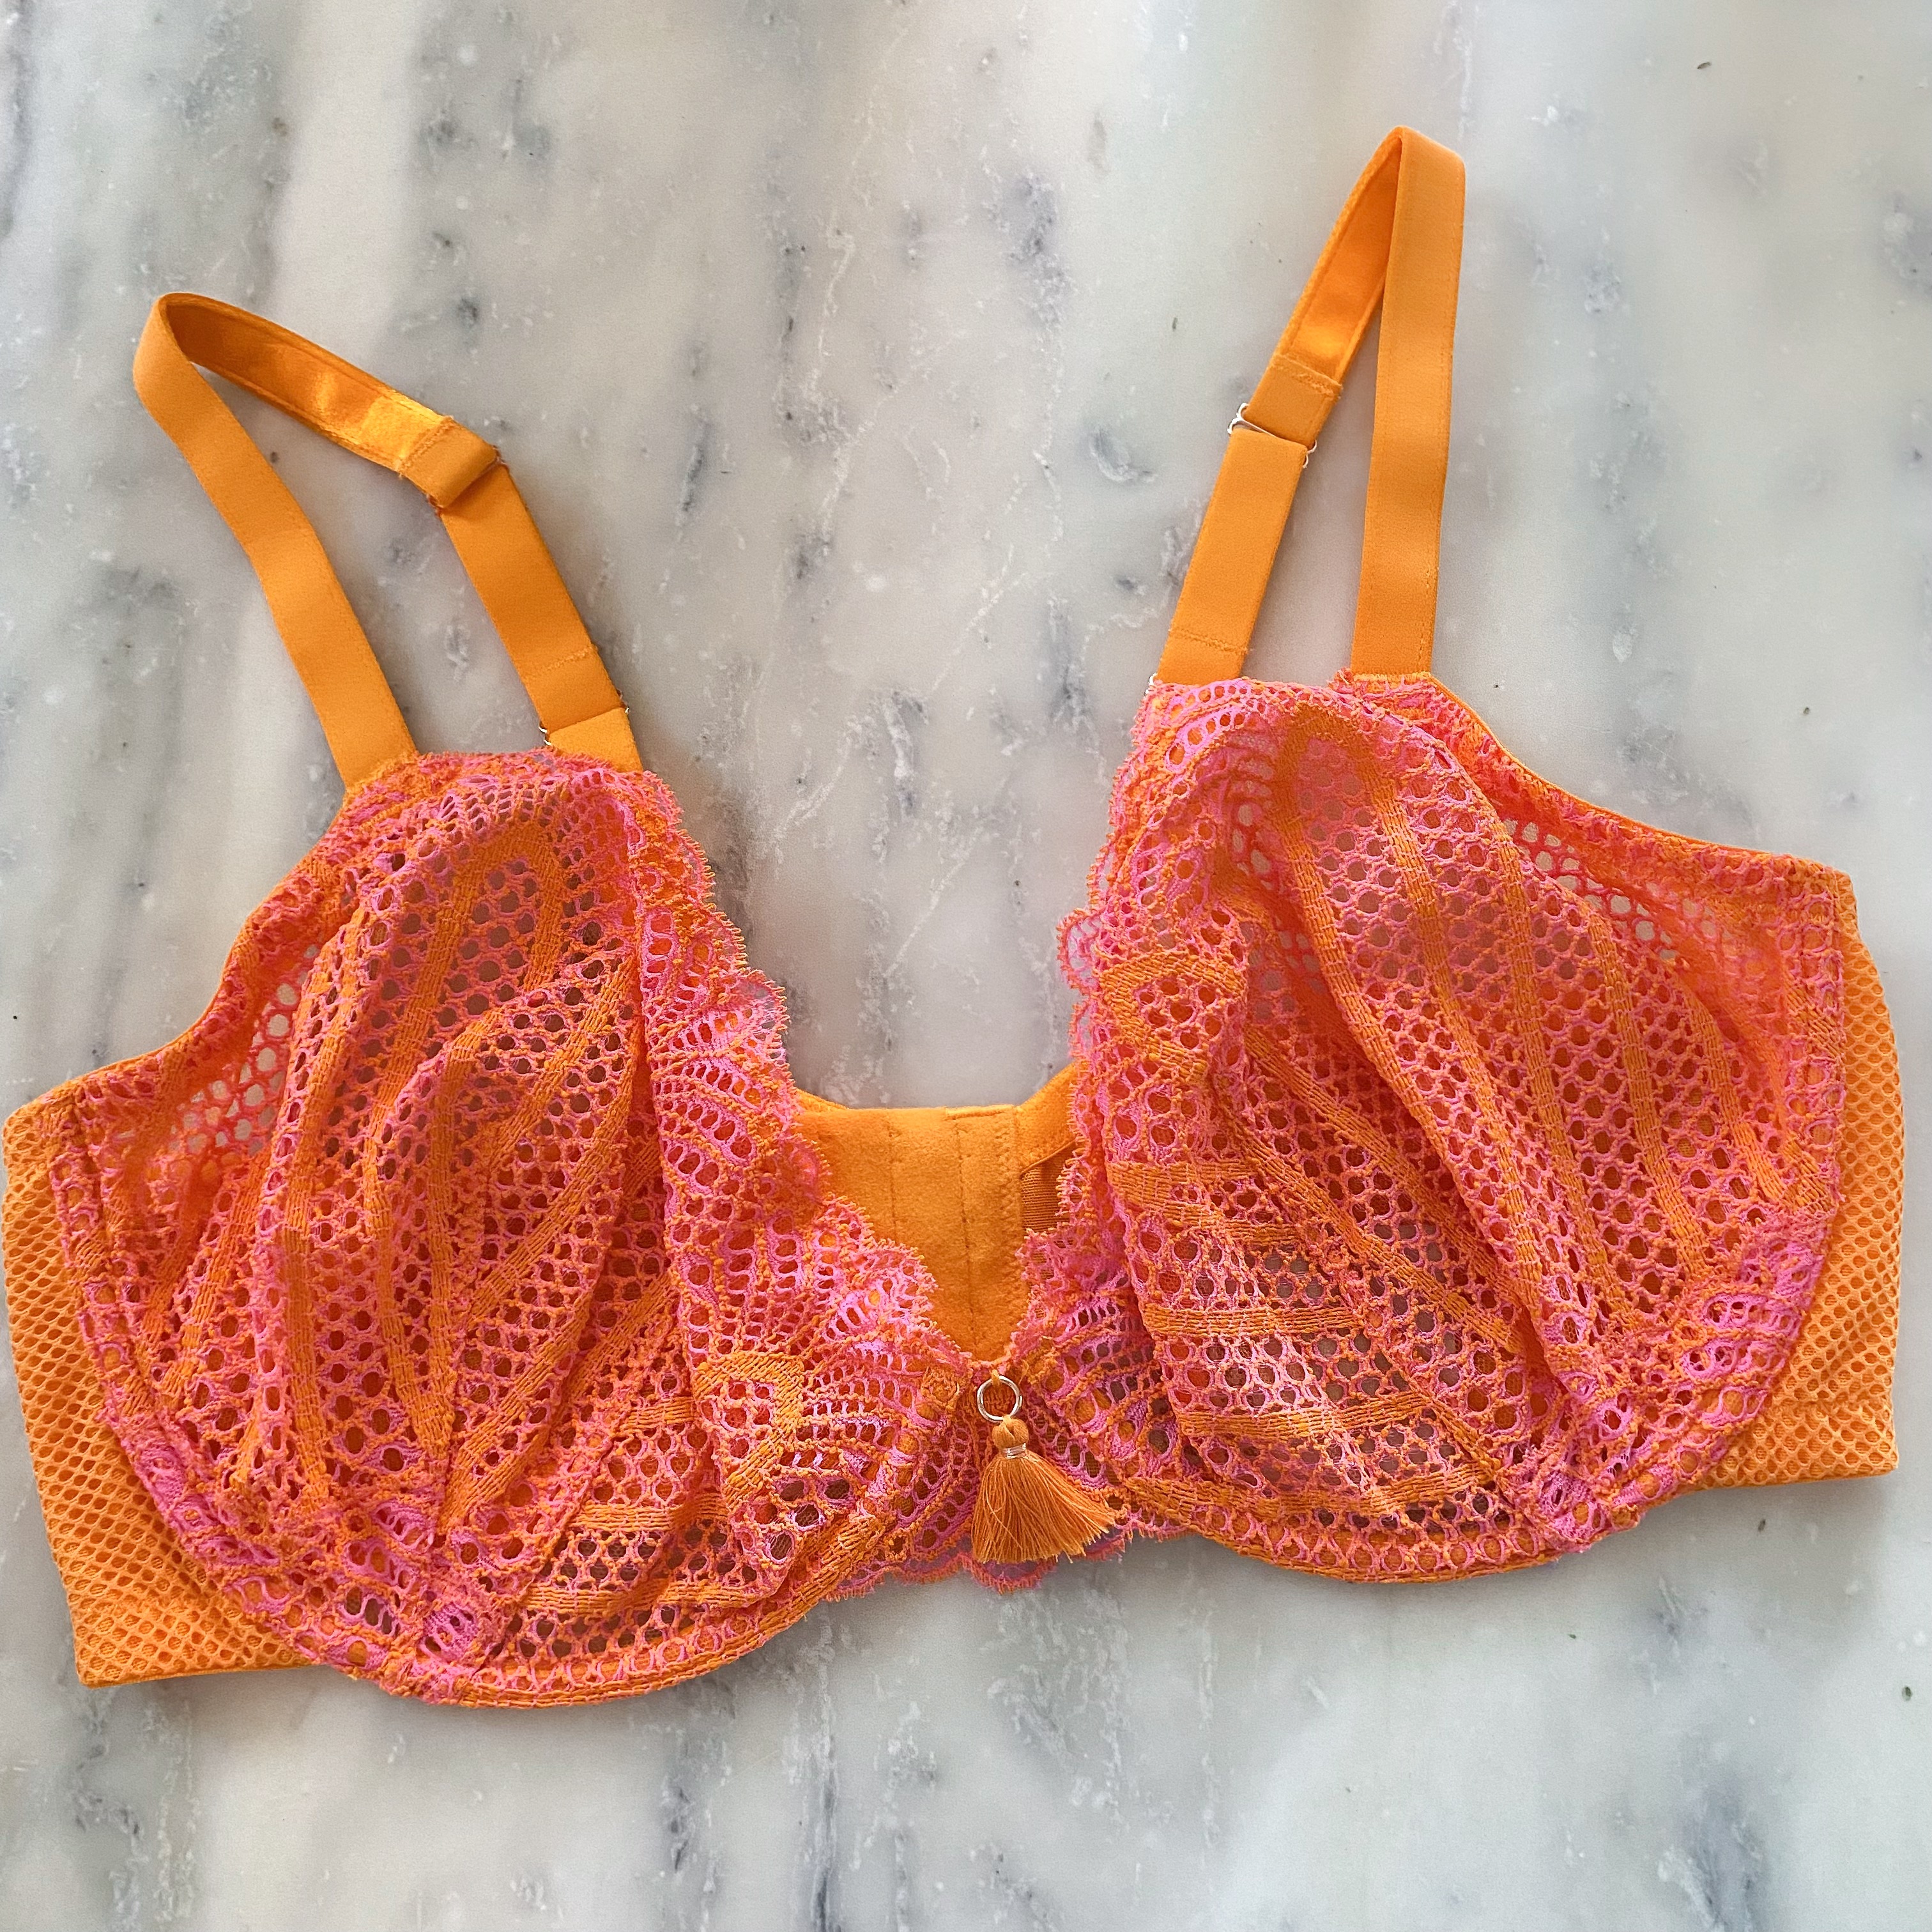 Savage X Fenty Bra Orange Size 36 D - $24 (40% Off Retail) - From Jessica